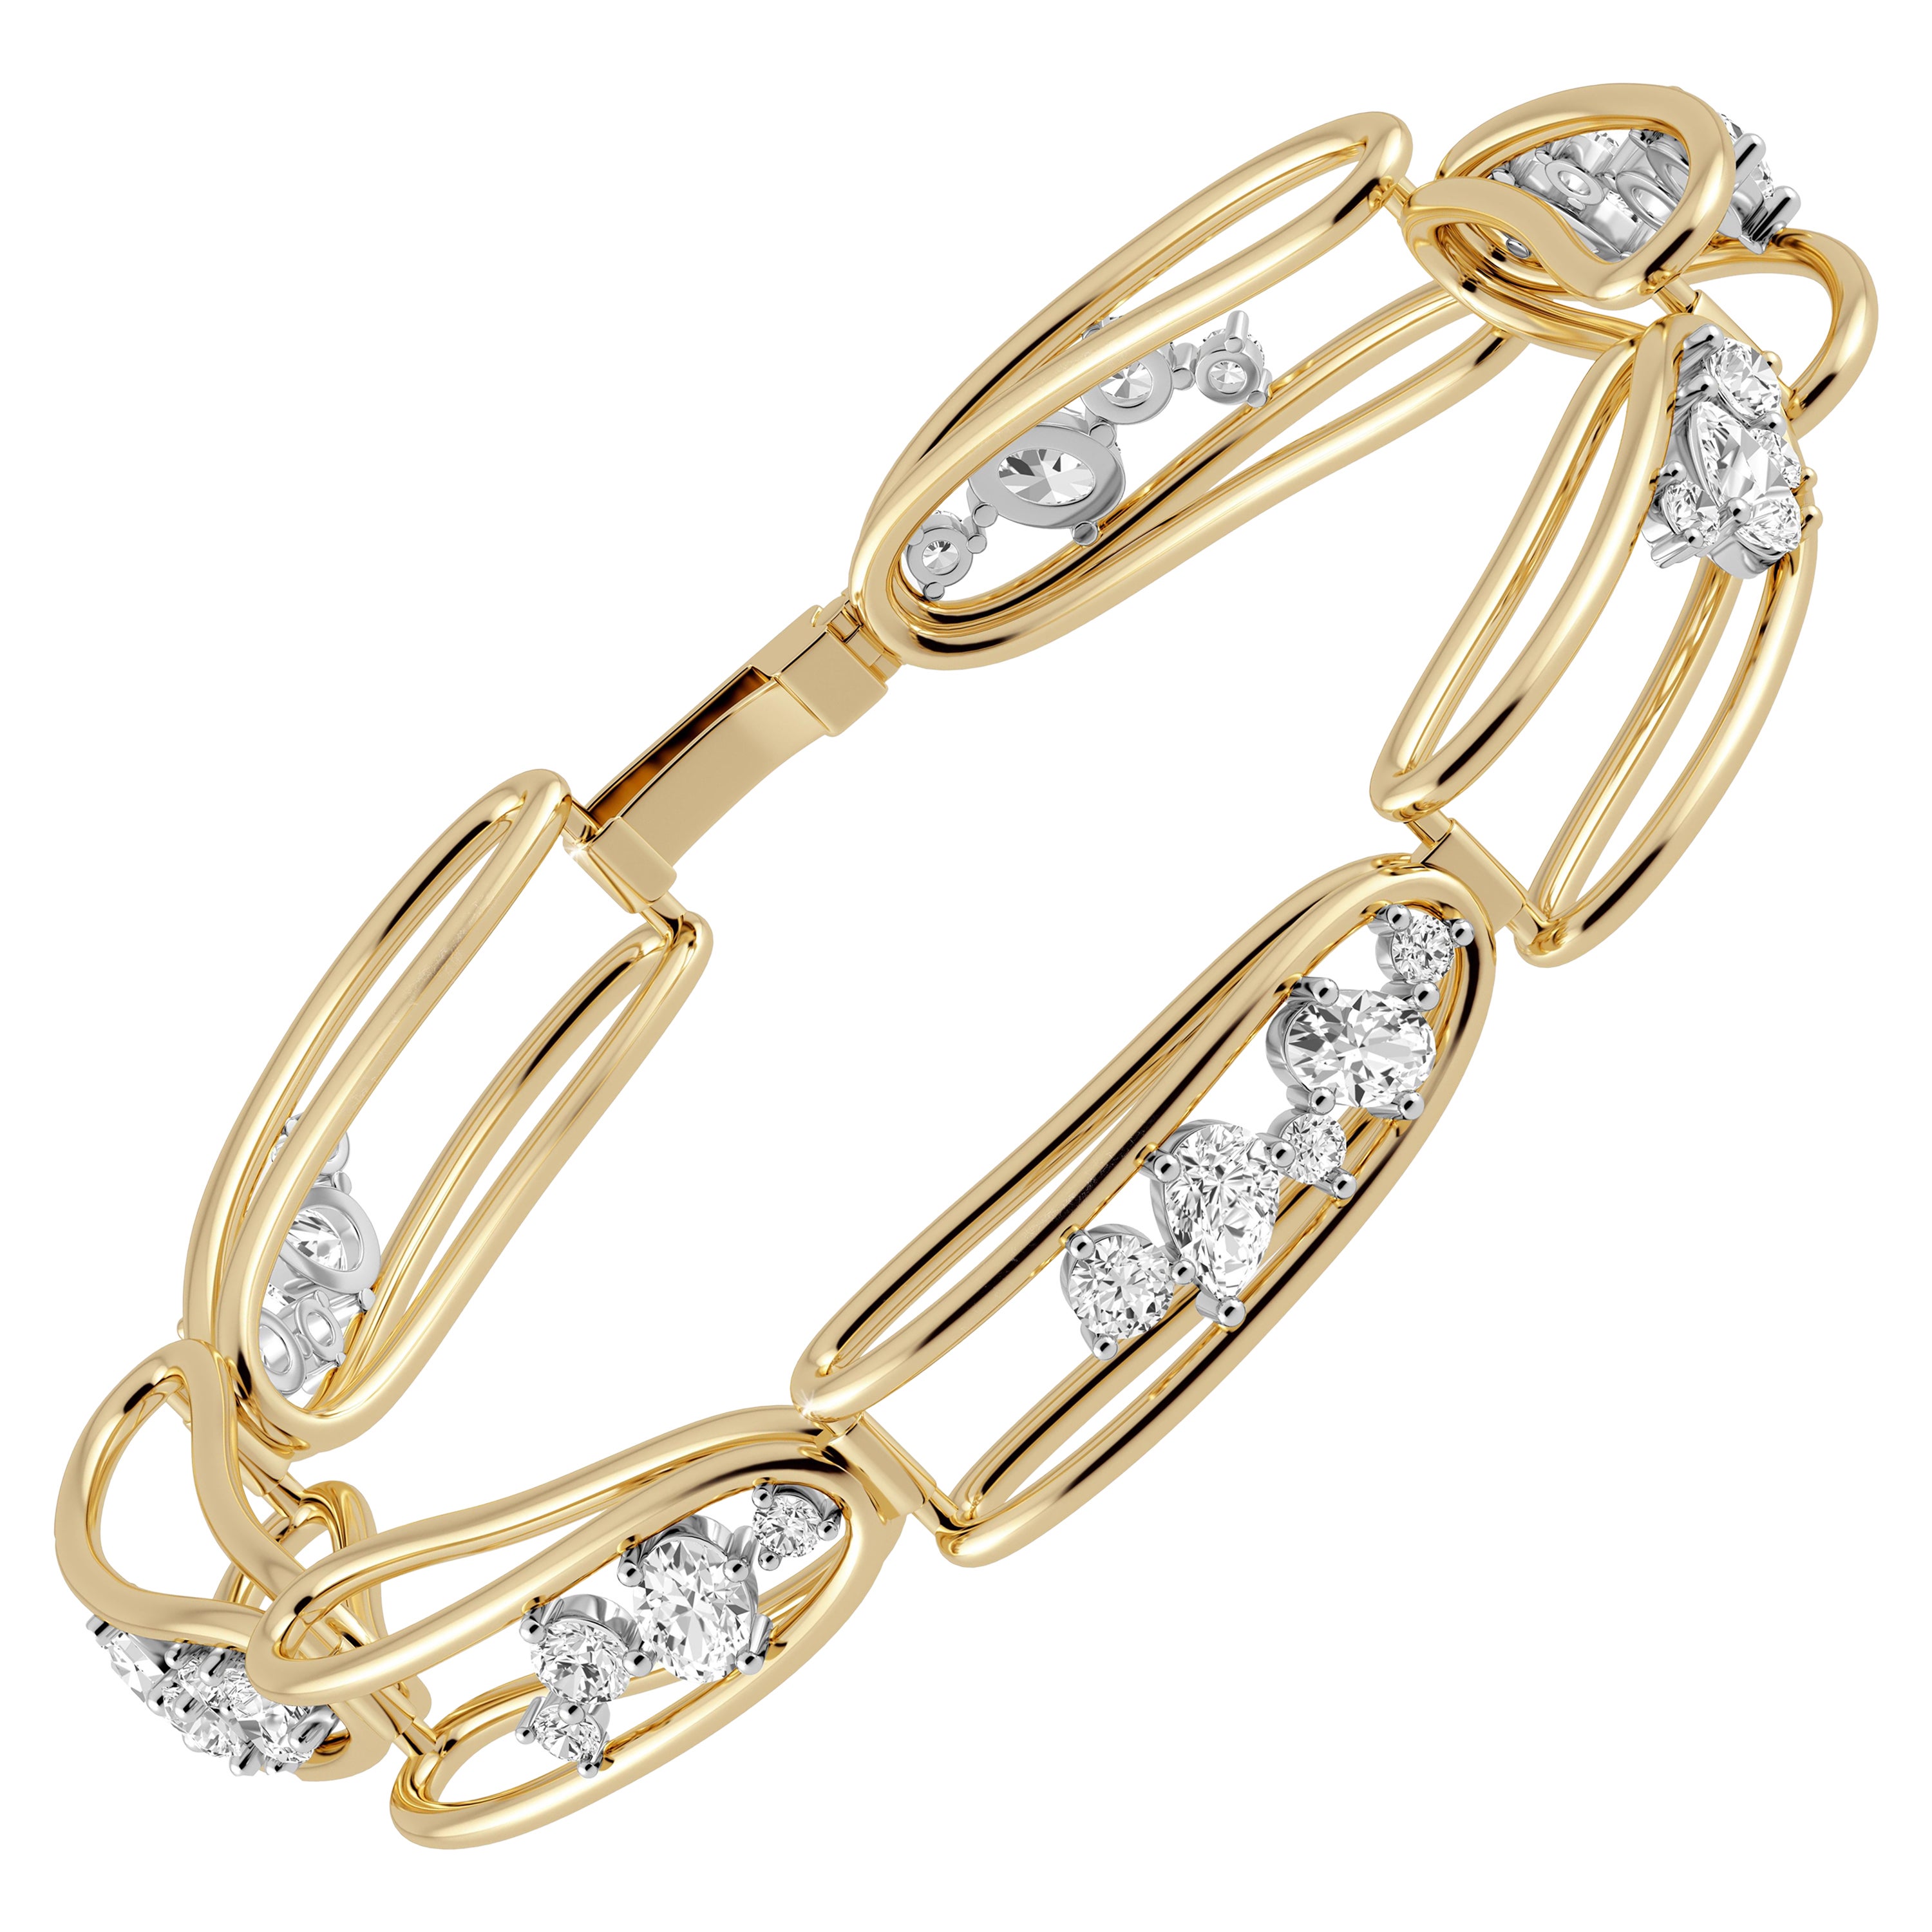 Rosario Navia Mara Folded Link Bracelet III in 18K Gold, Platinum, and Diamonds For Sale